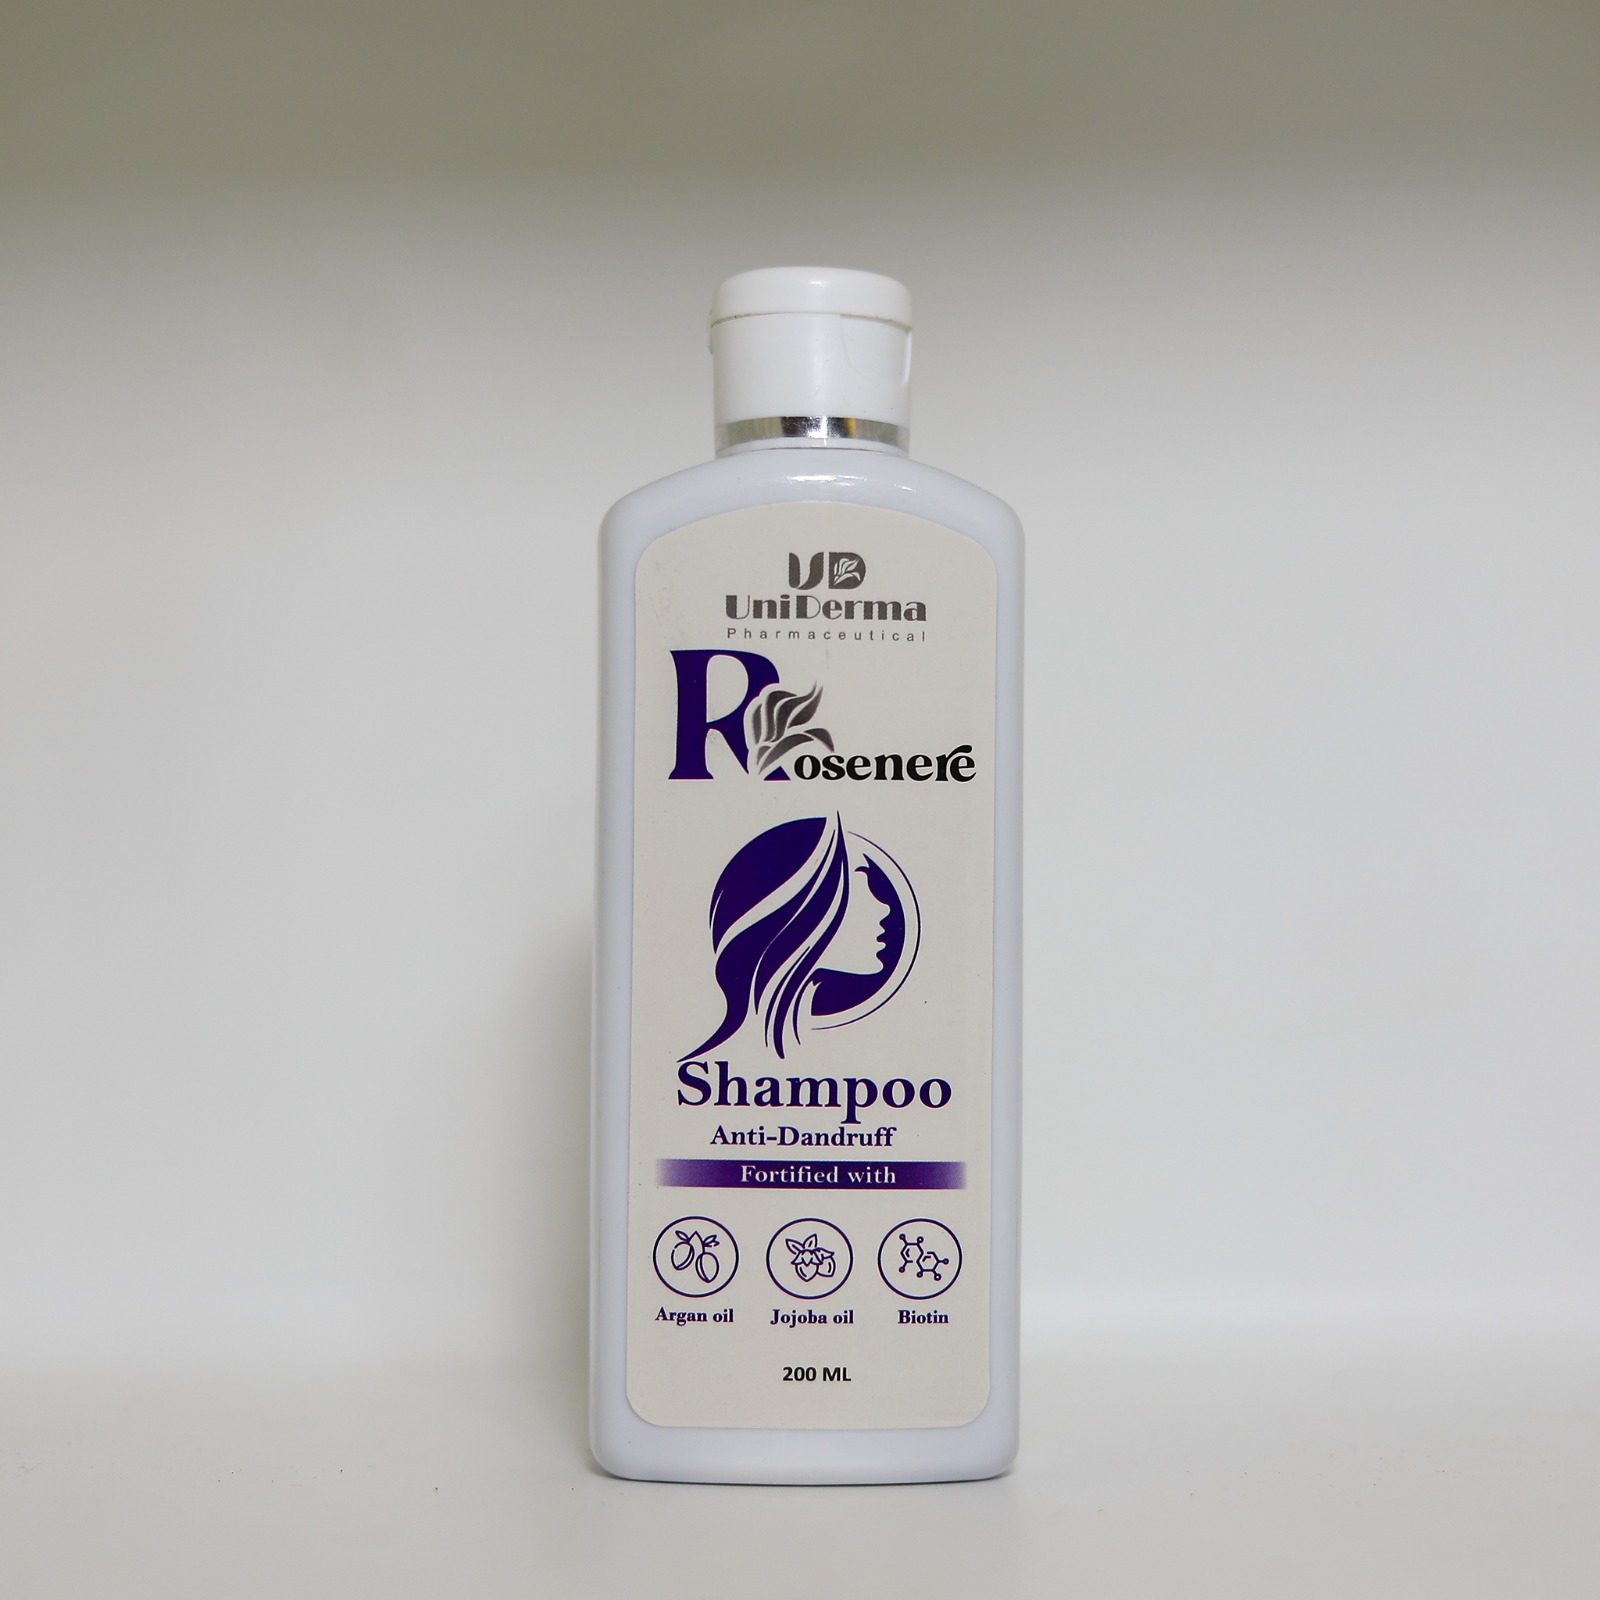 Rosenere anti-dandruff shampoo